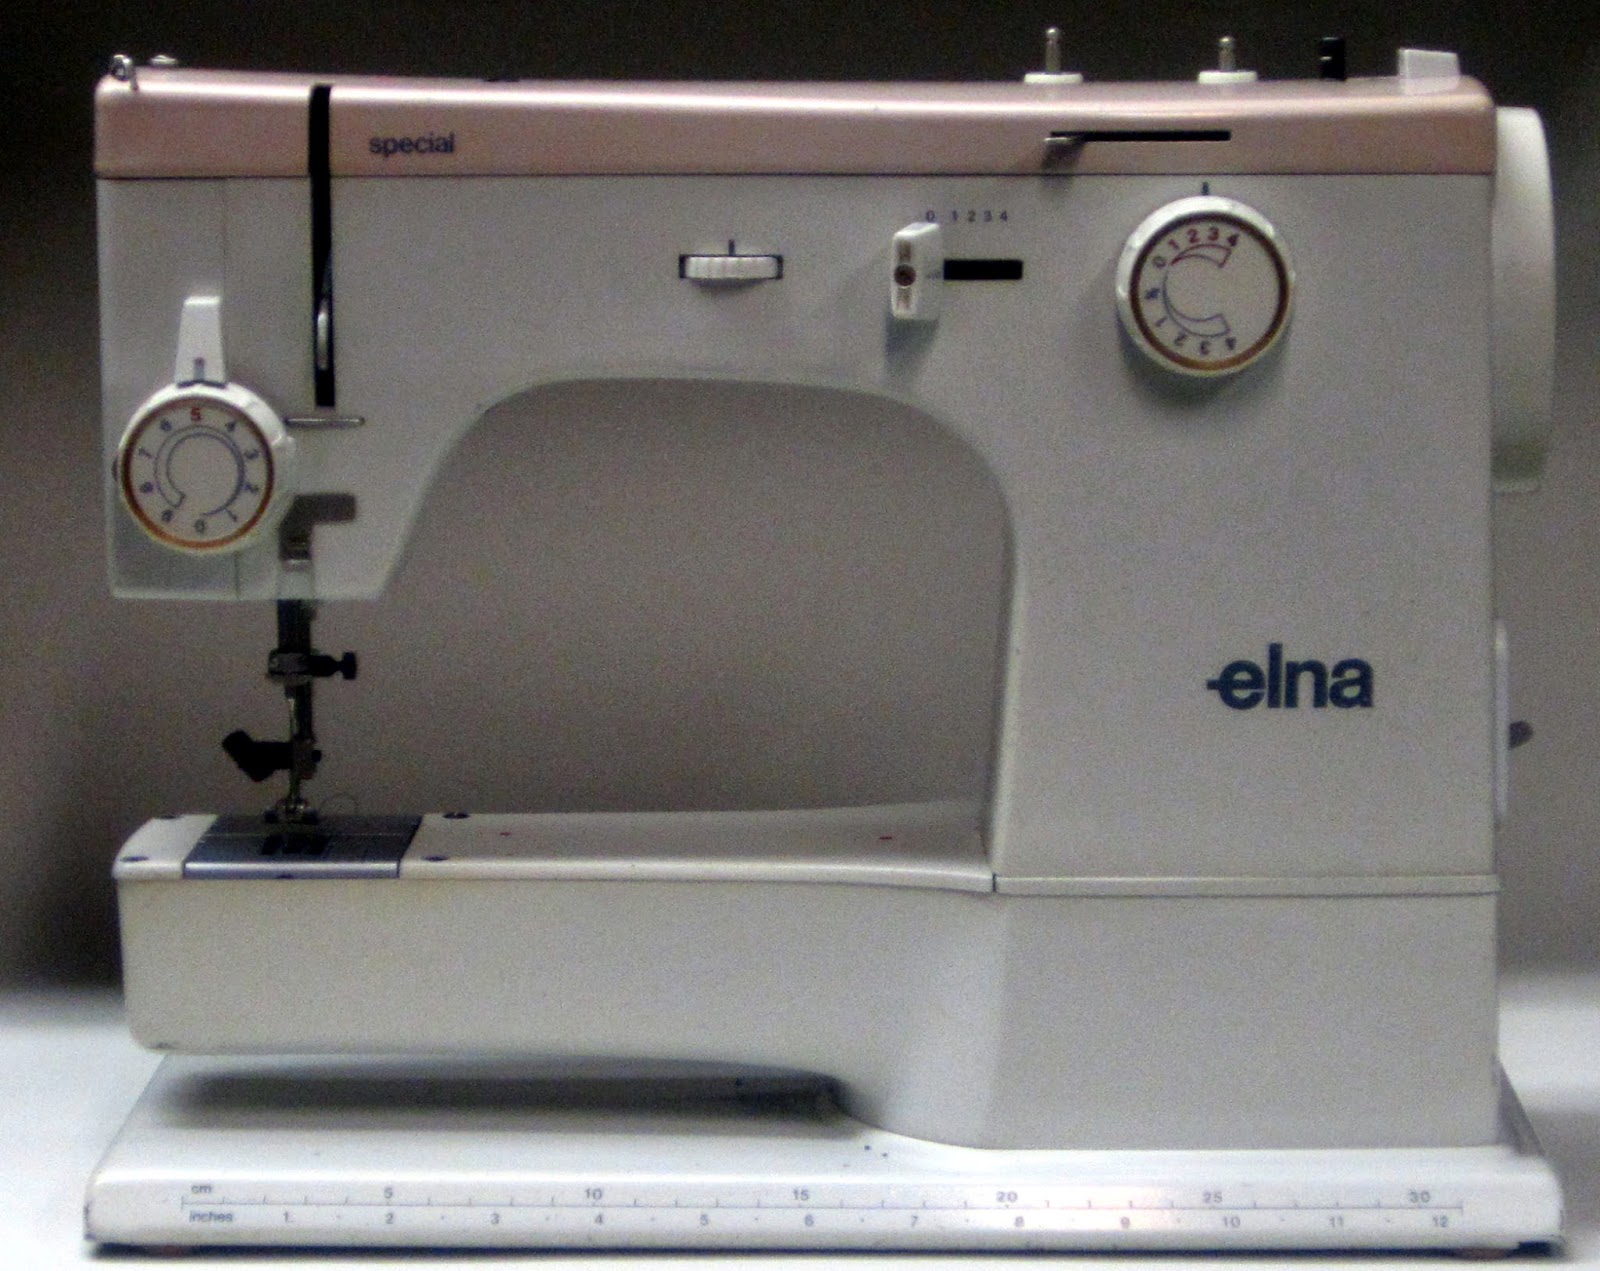 ELNA Sewing Machines, Season Specials